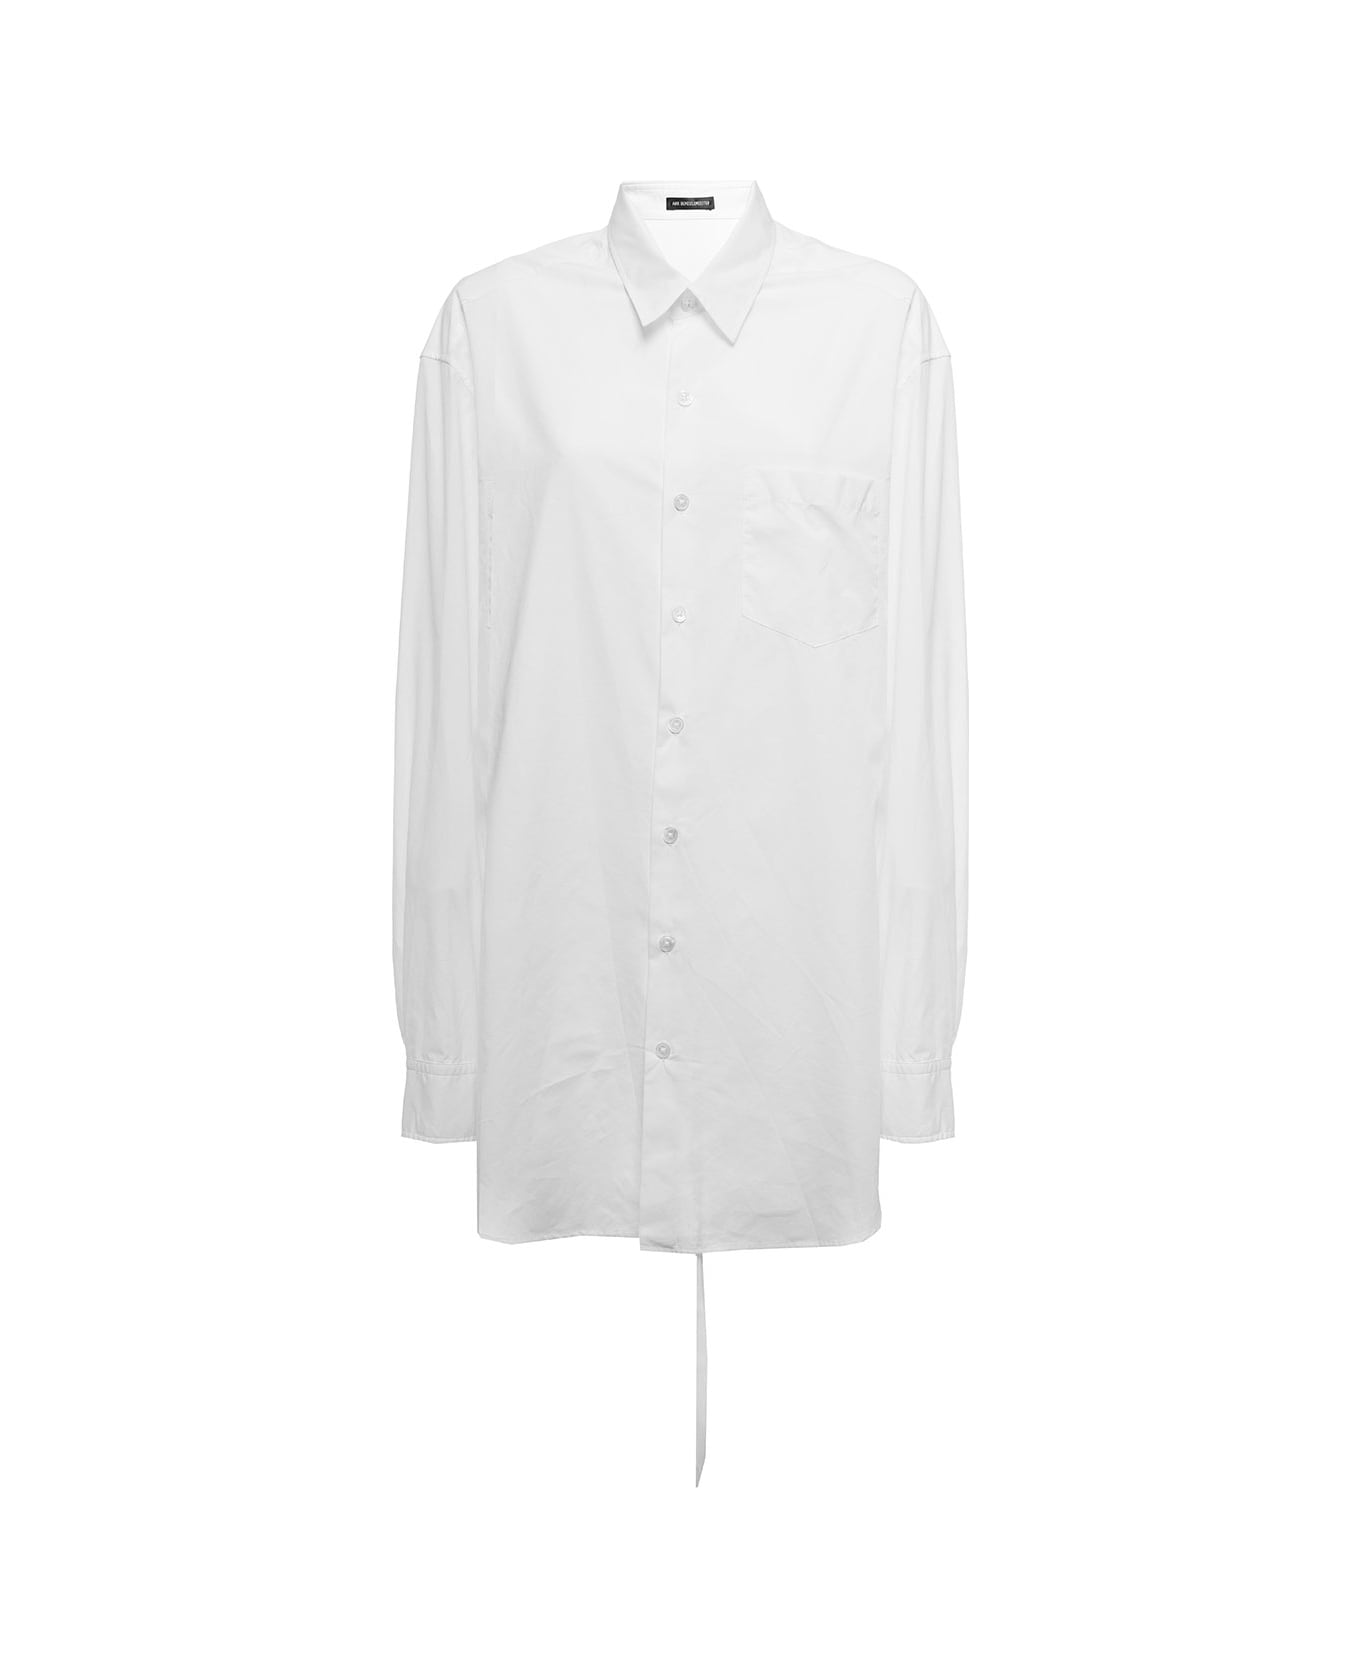 Ann Demeulemeester Anne Demeulemeester White Cotton Woman's Poplin Shirt - White シャツ